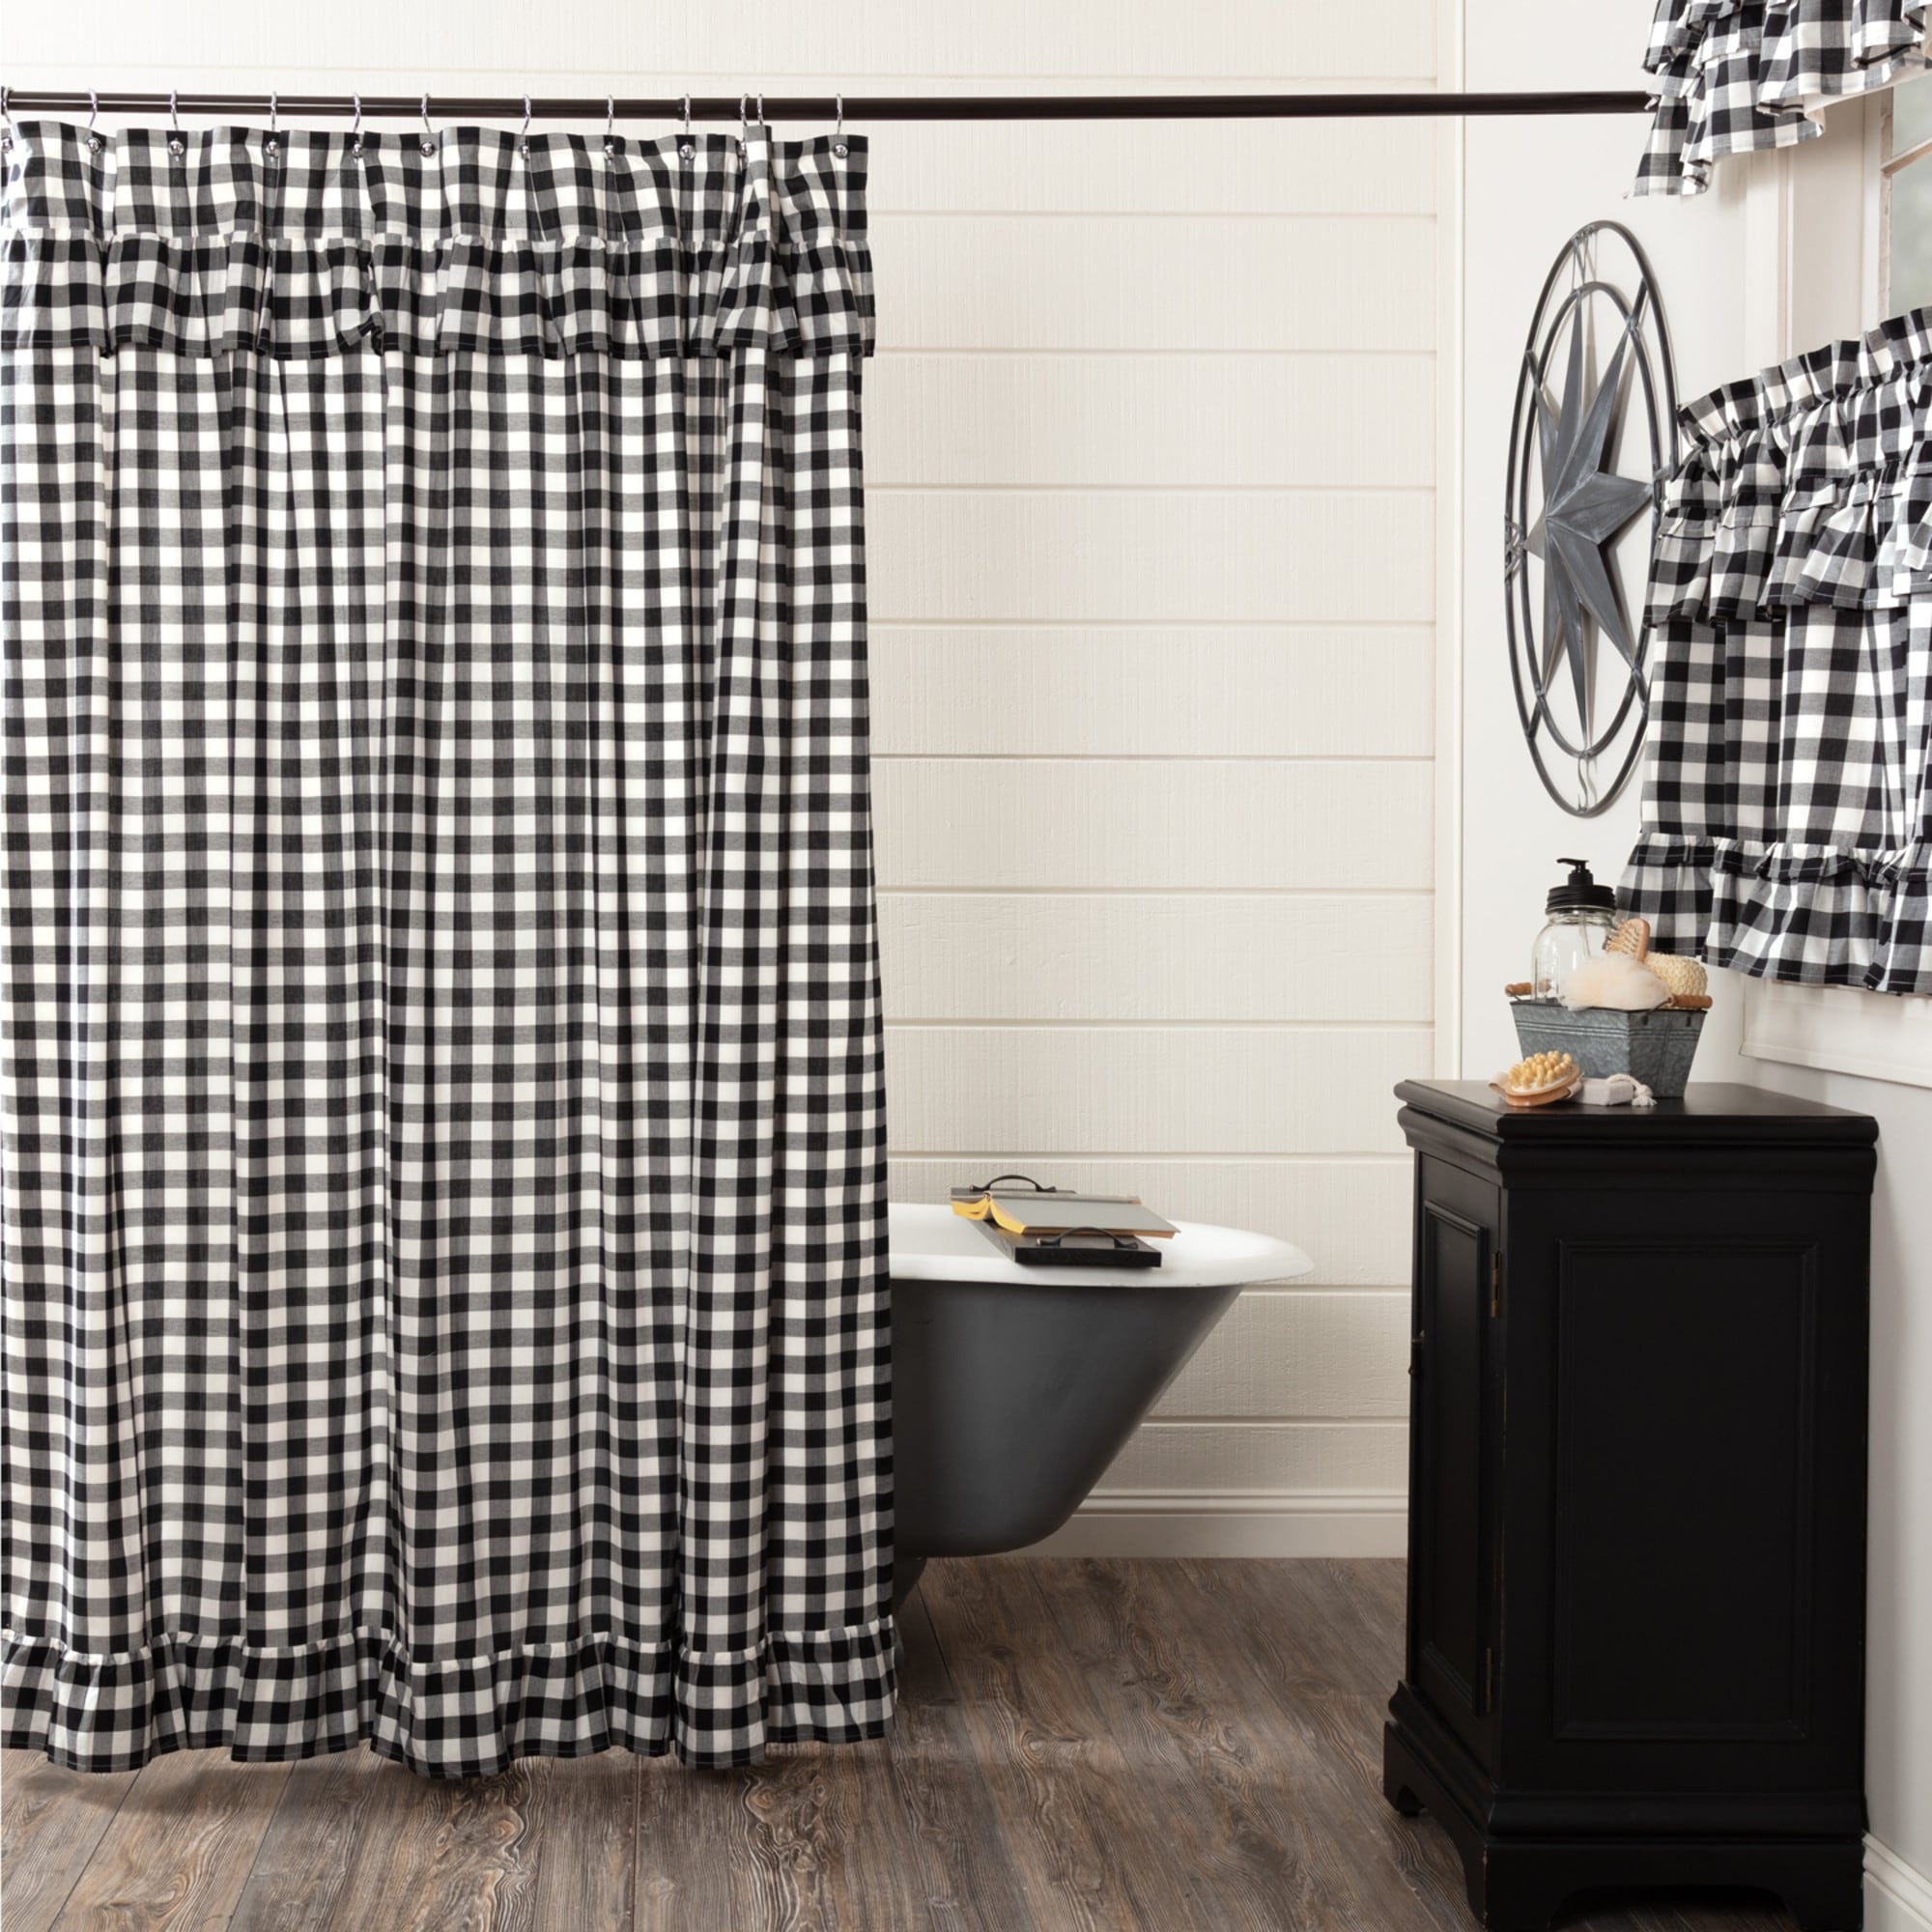 Farmhouse Shower Curtains, Blue Buffalo Check Shower Curtain, Plaid Bath  Mat, Gingham Bath Towel, Beach Towel, or Country Hand Towels Set. 